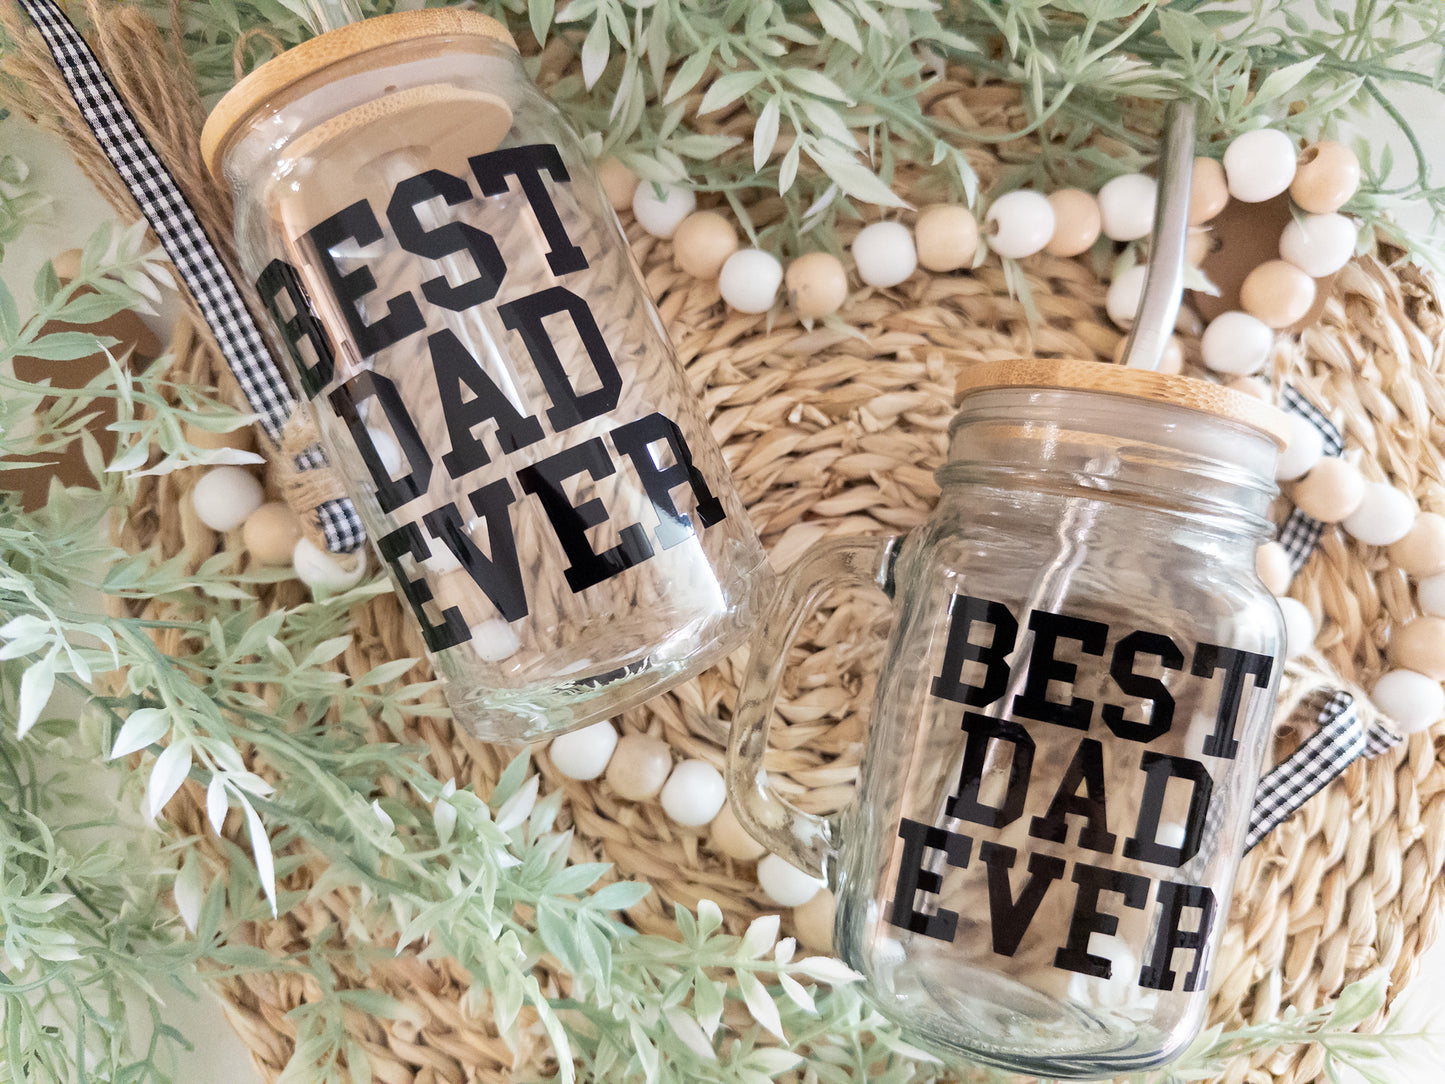 Best Dad Ever Glass Can| Mason Jar